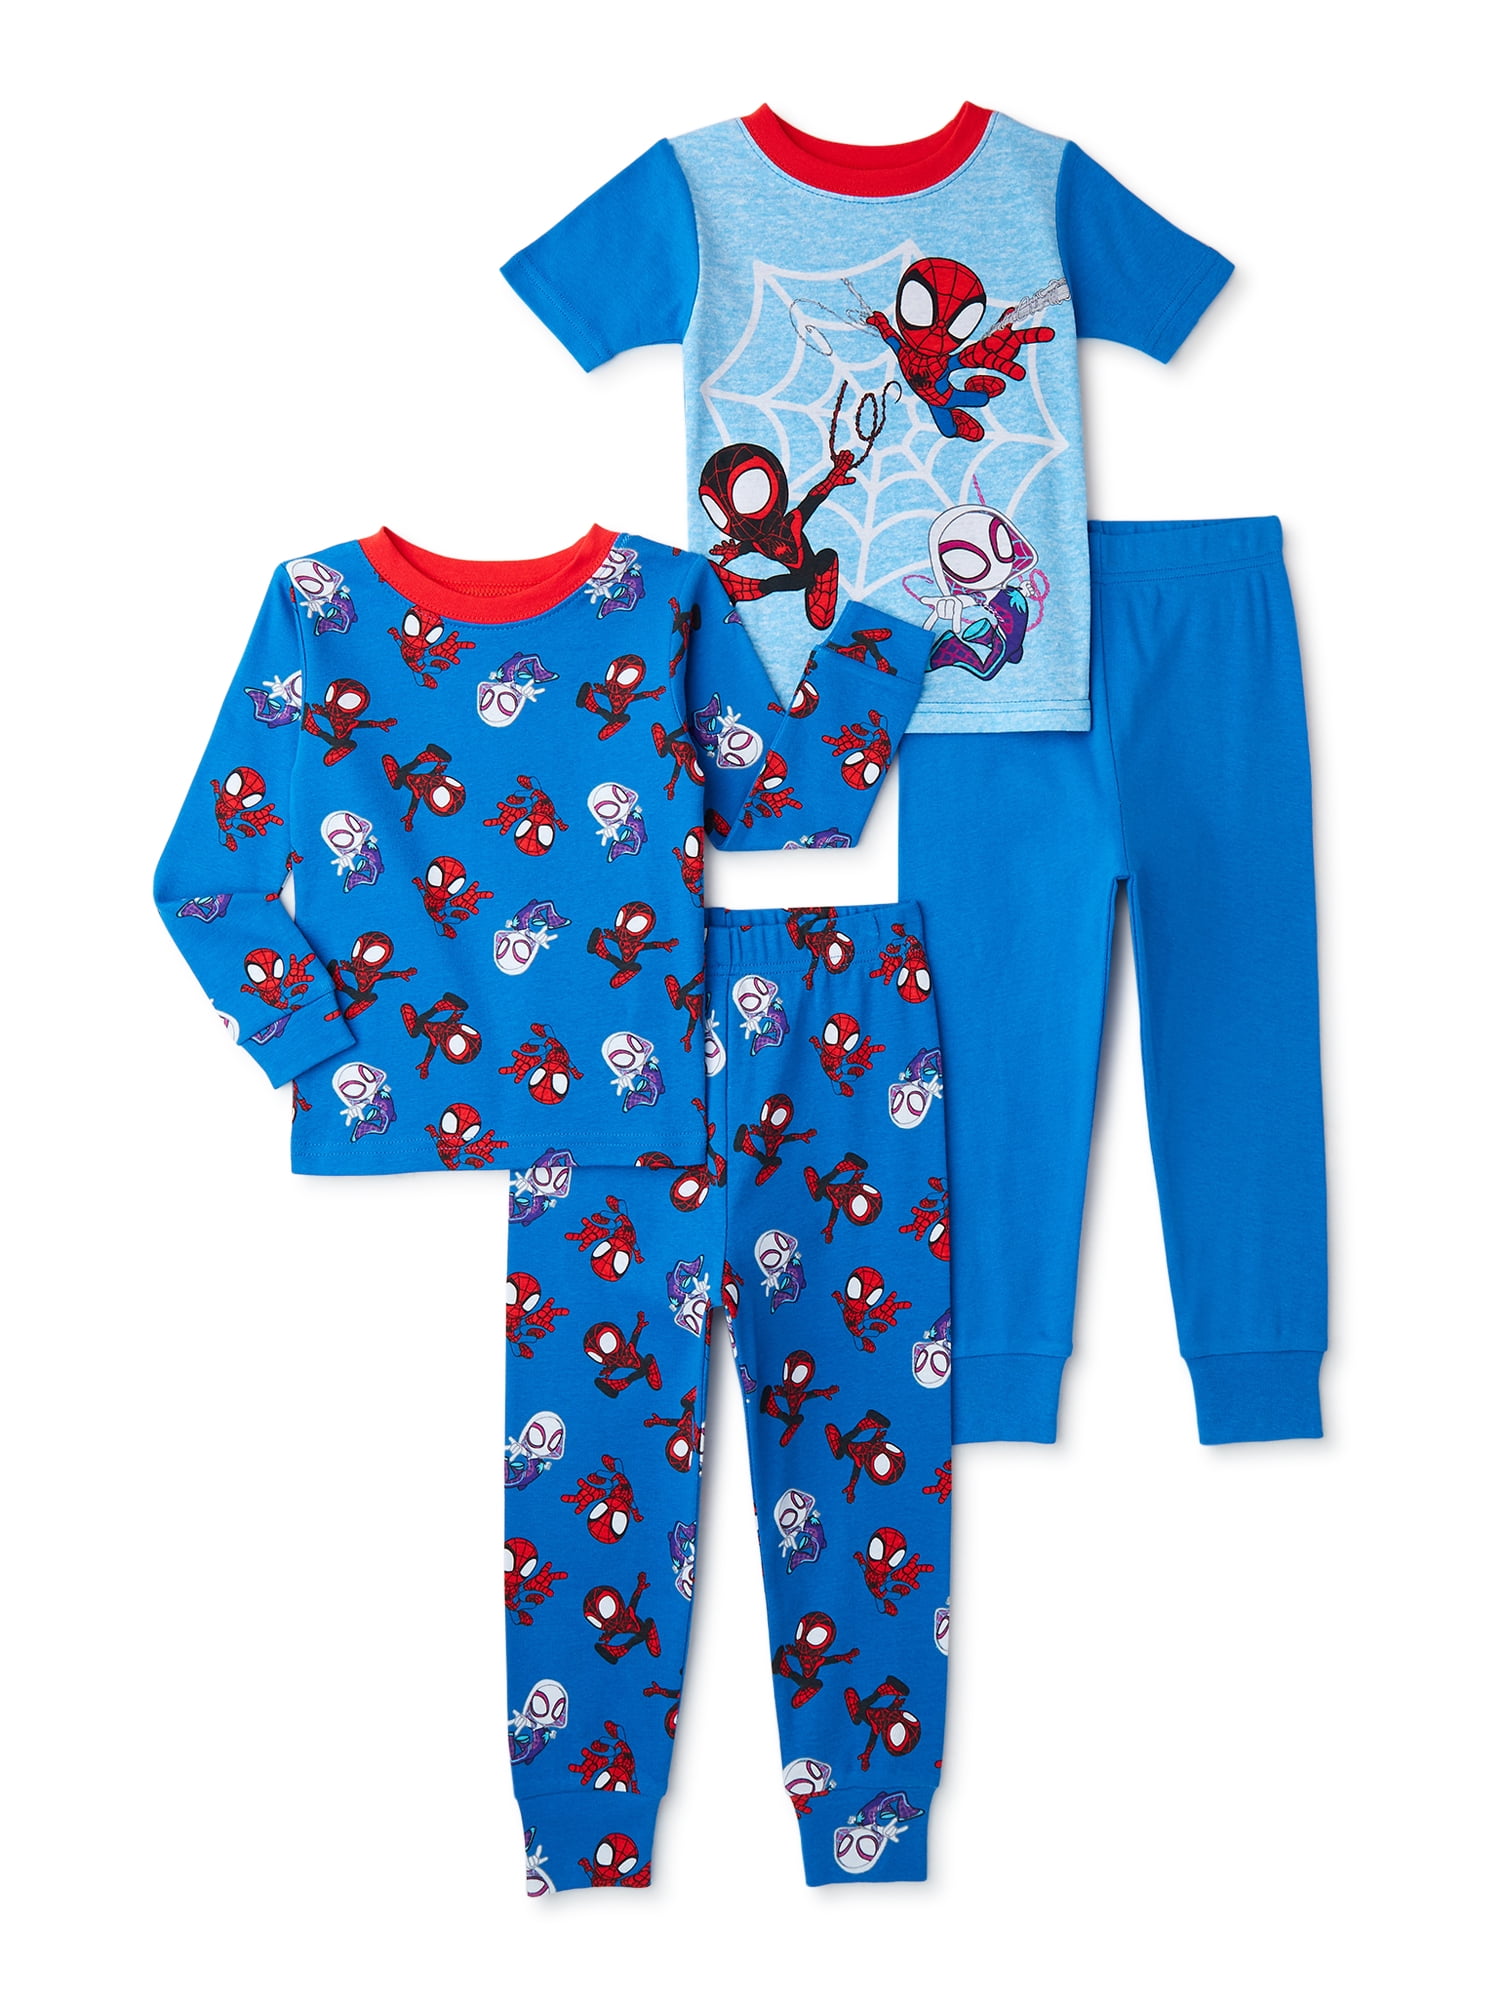 Marvel Spiderman Pyjamas Boys Kids Blue Short Cotton Pjs Nightwear 